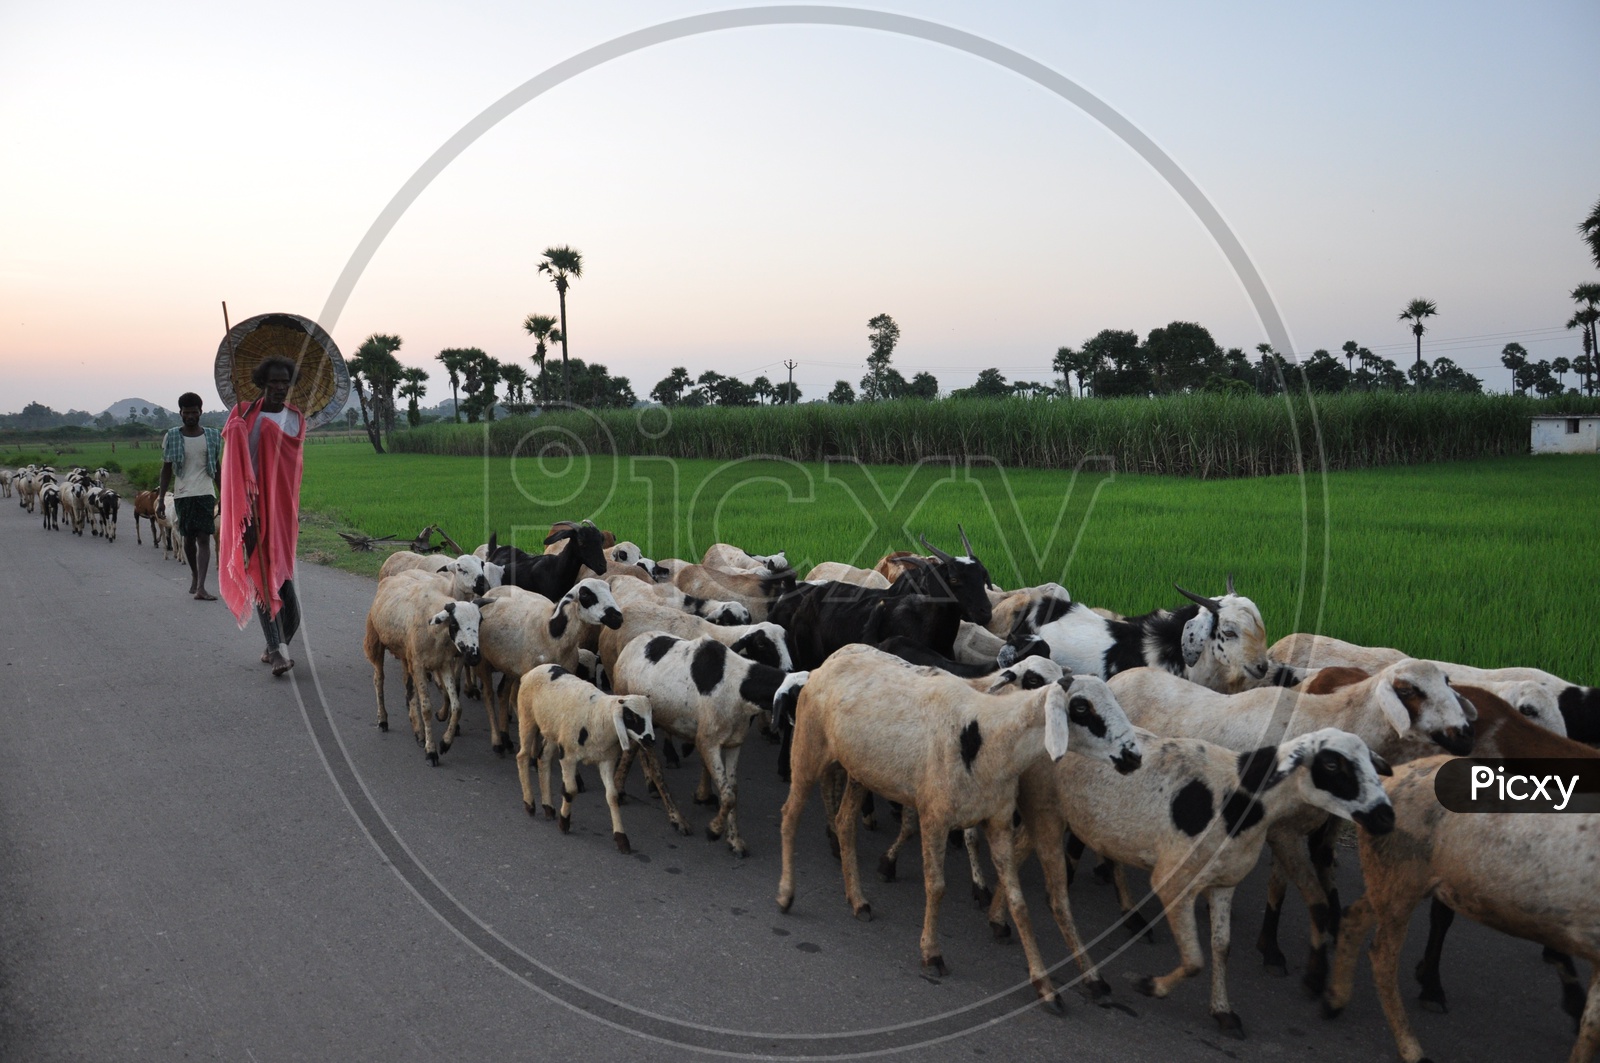 Sheep grazing at village